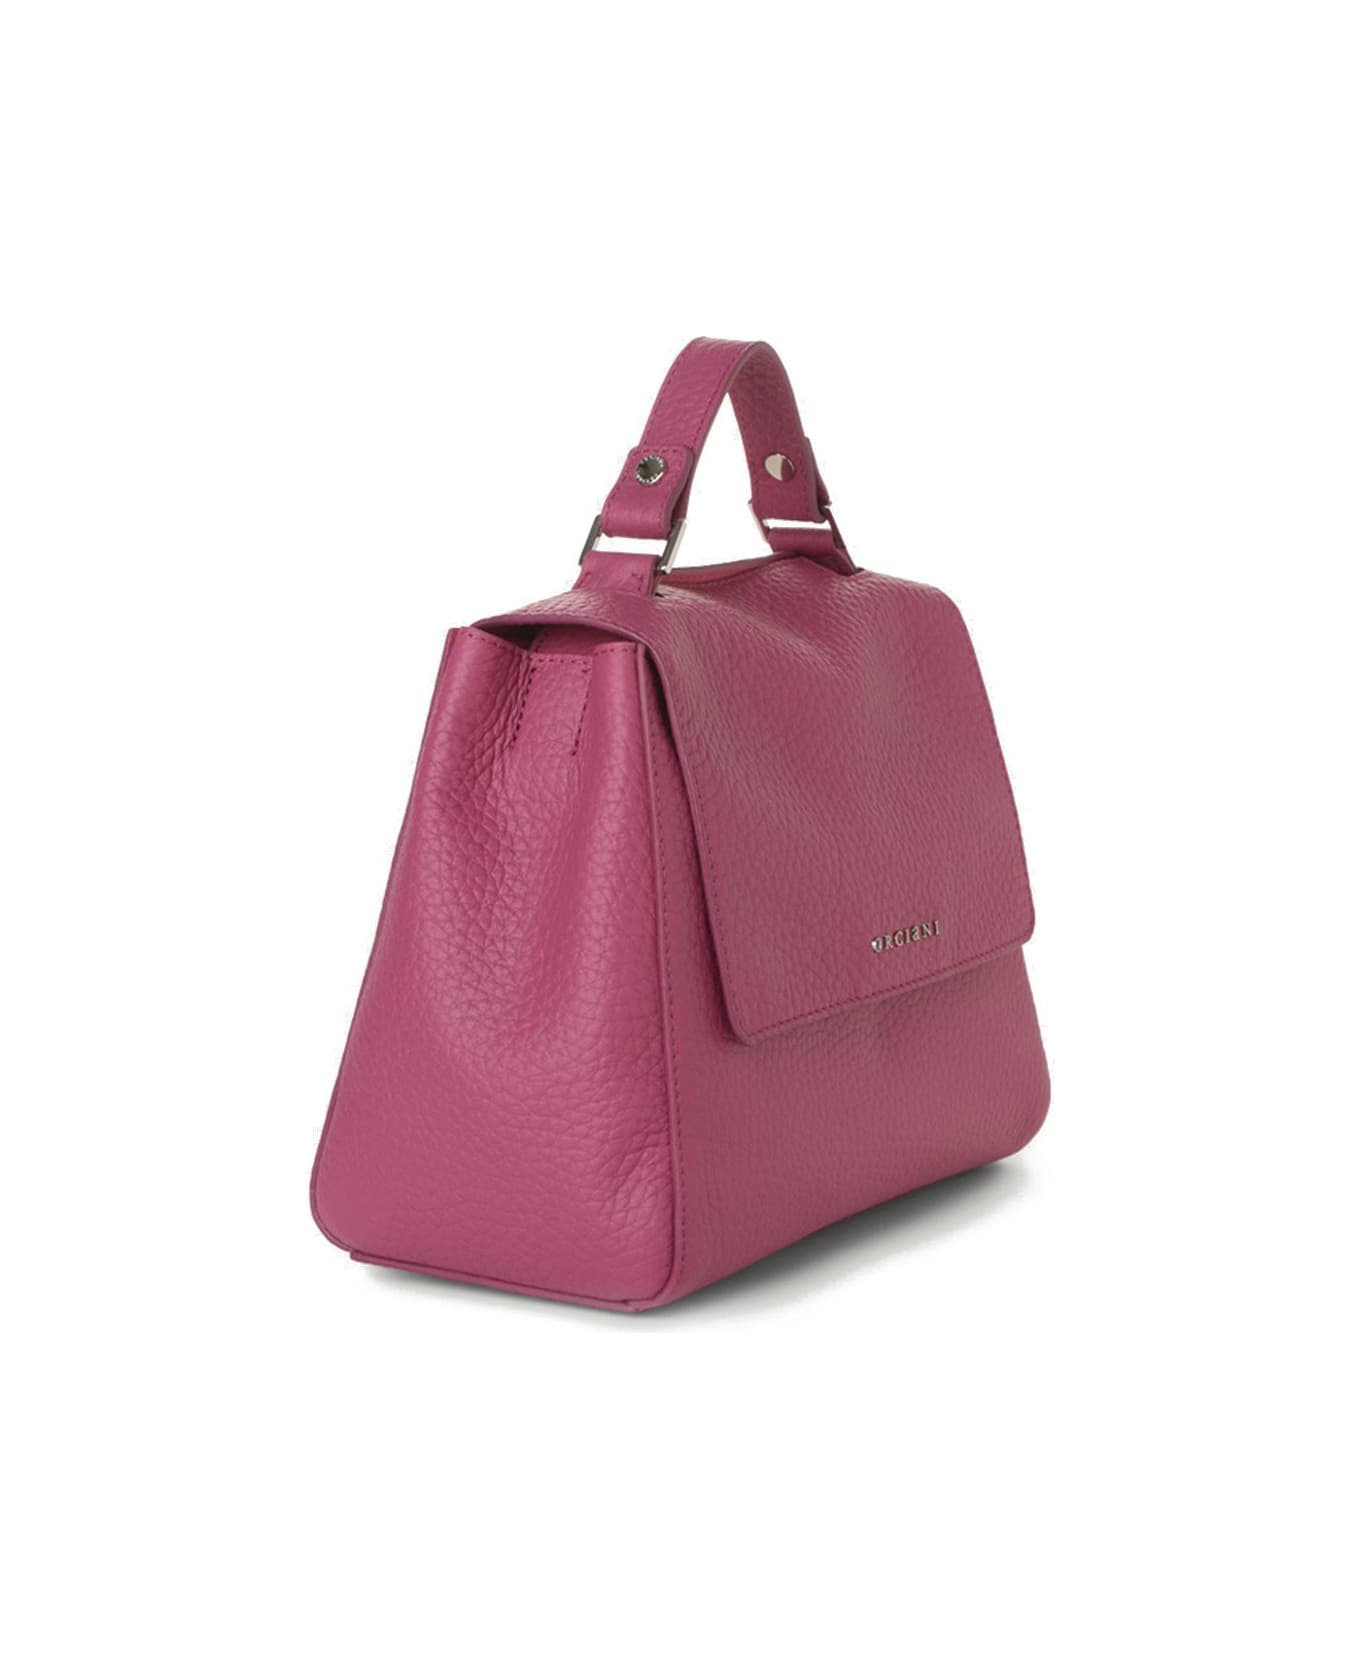 Orciani Sveva Soft Small Handbag In Fuchsia - LAMPONE トートバッグ